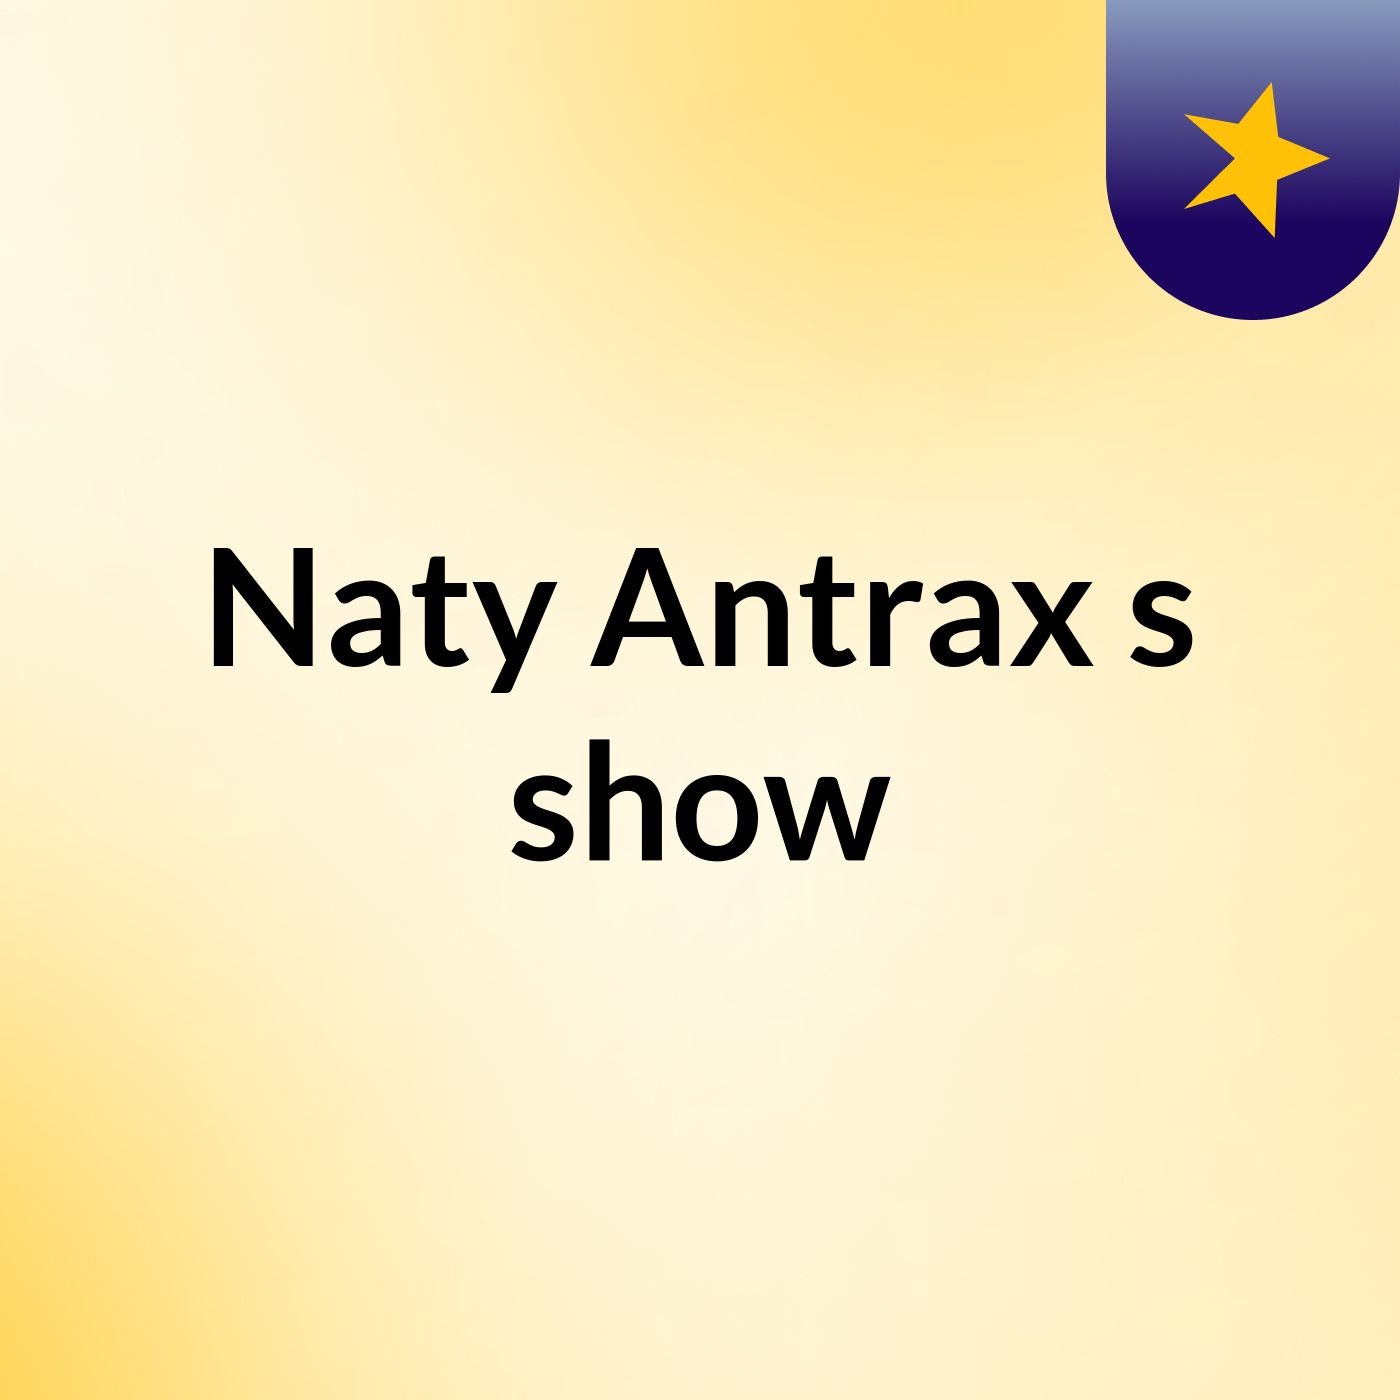 Naty Antrax's show